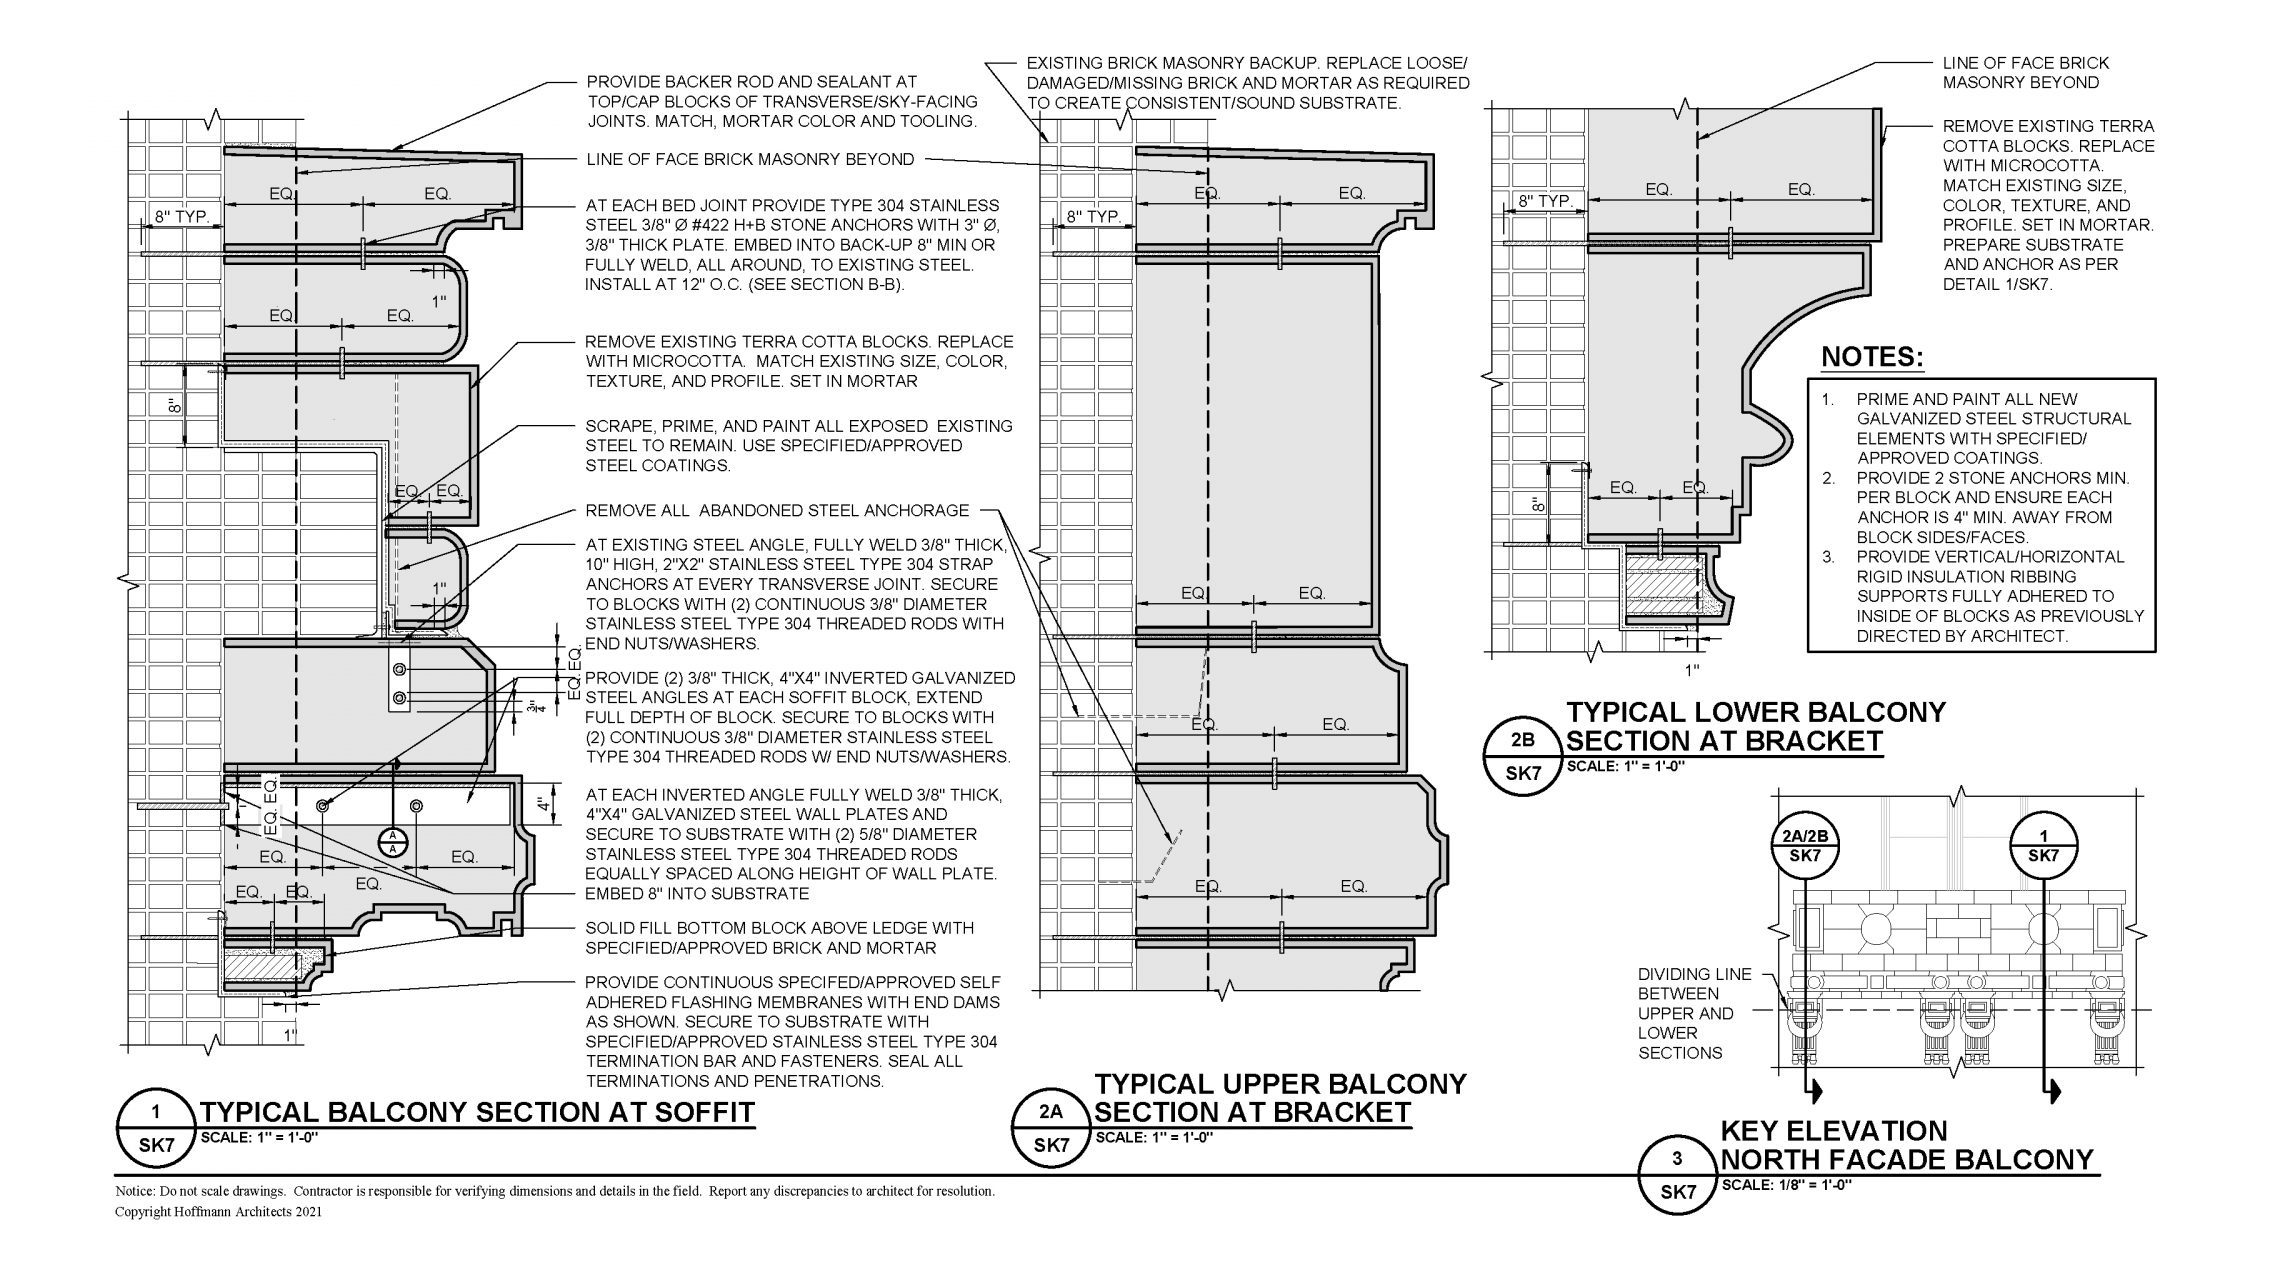 Design details for restoration of terra cotta Juliet balcony